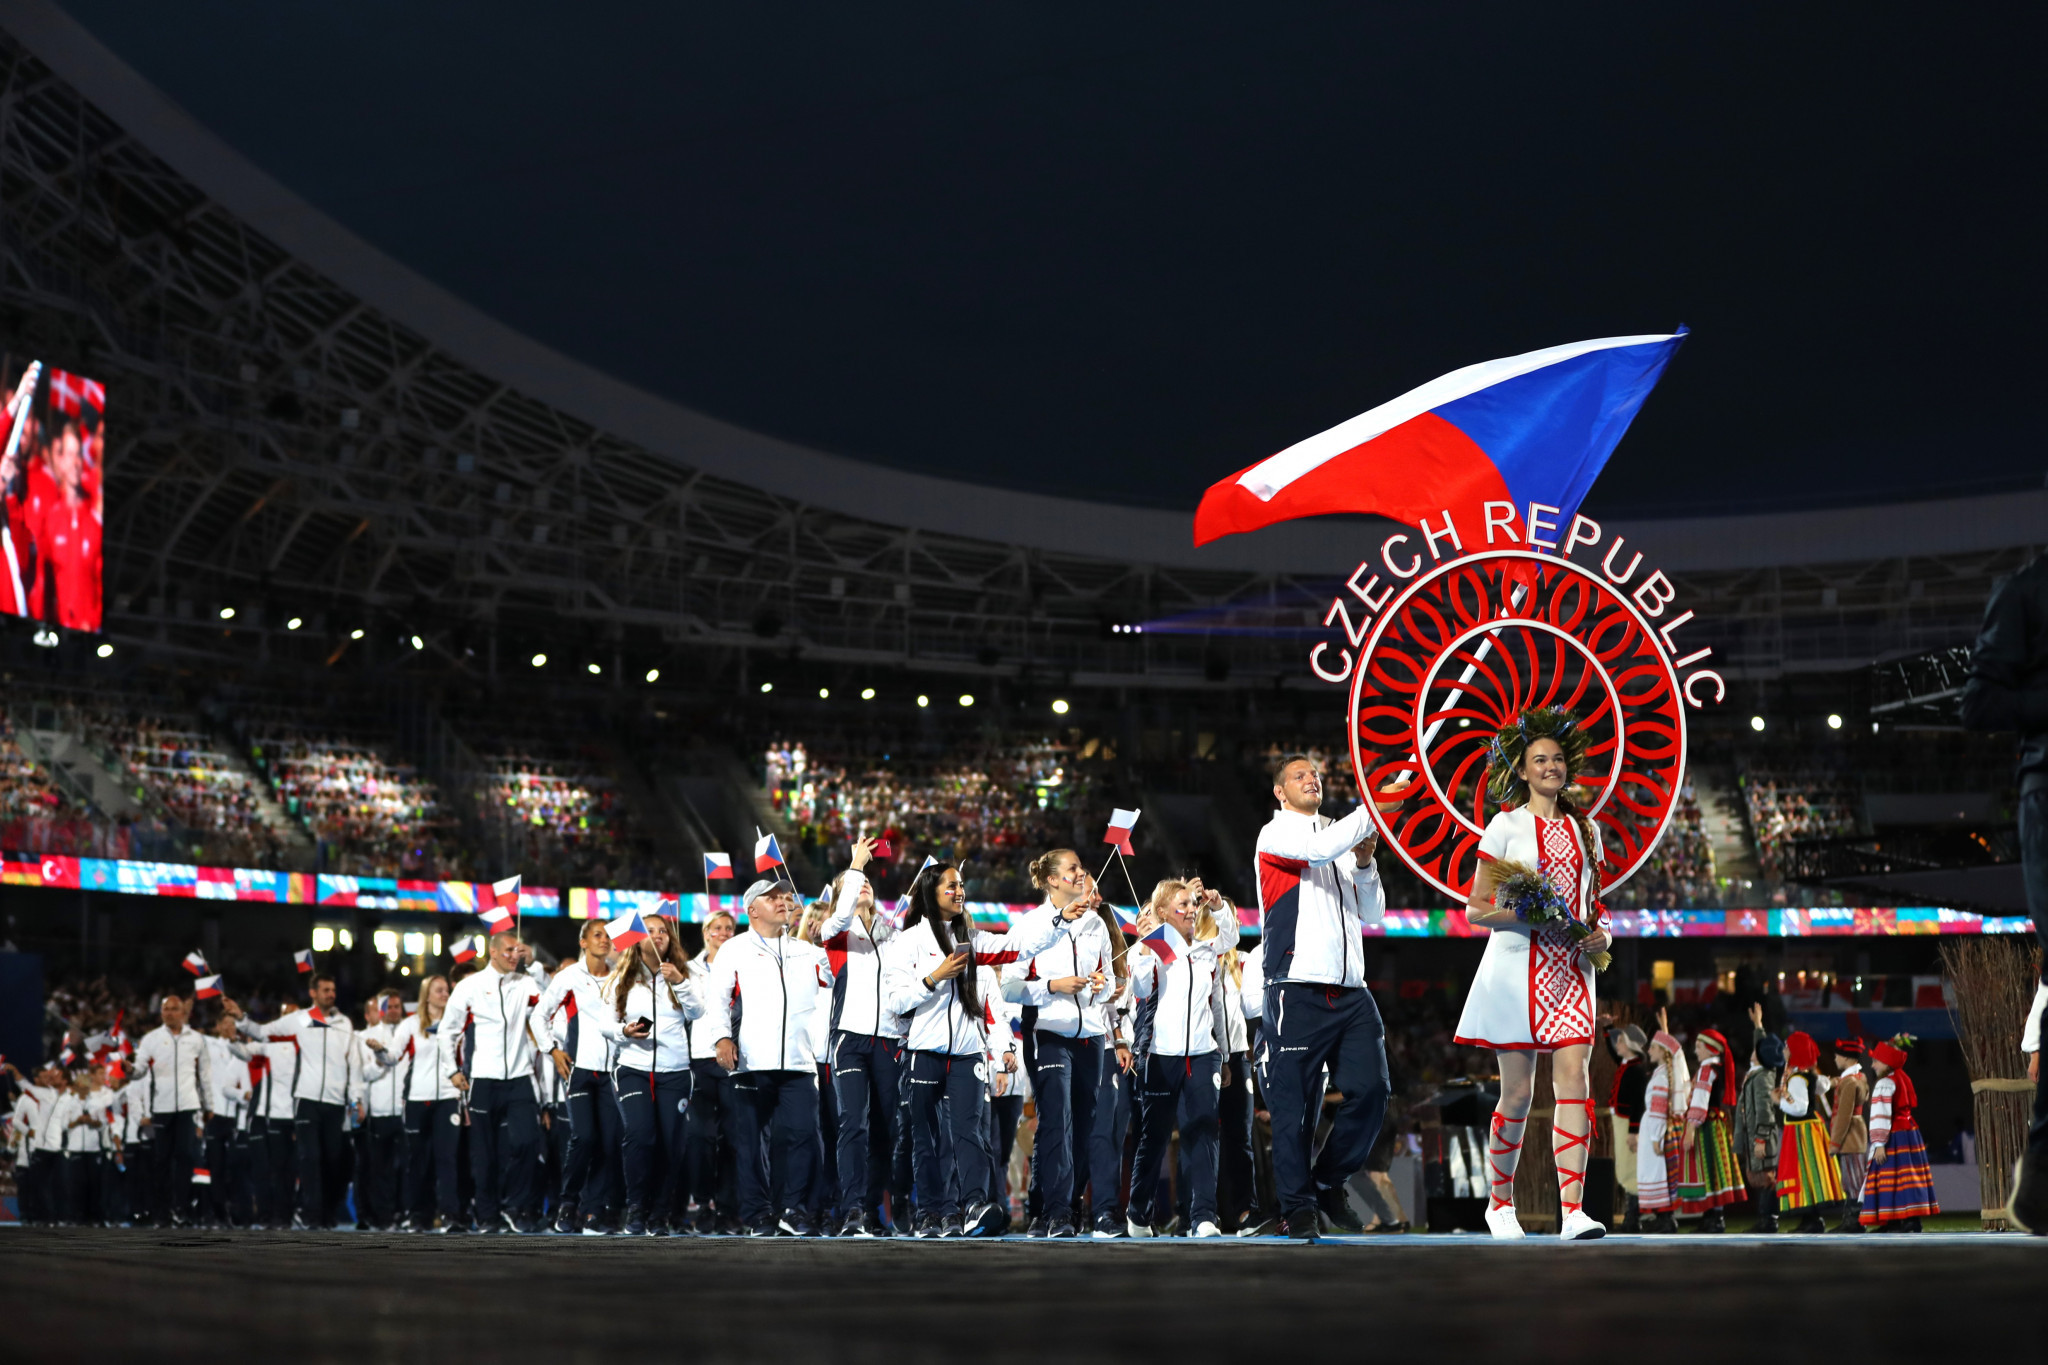 Czech Republic plan team of nearly 200 for 2023 European Games